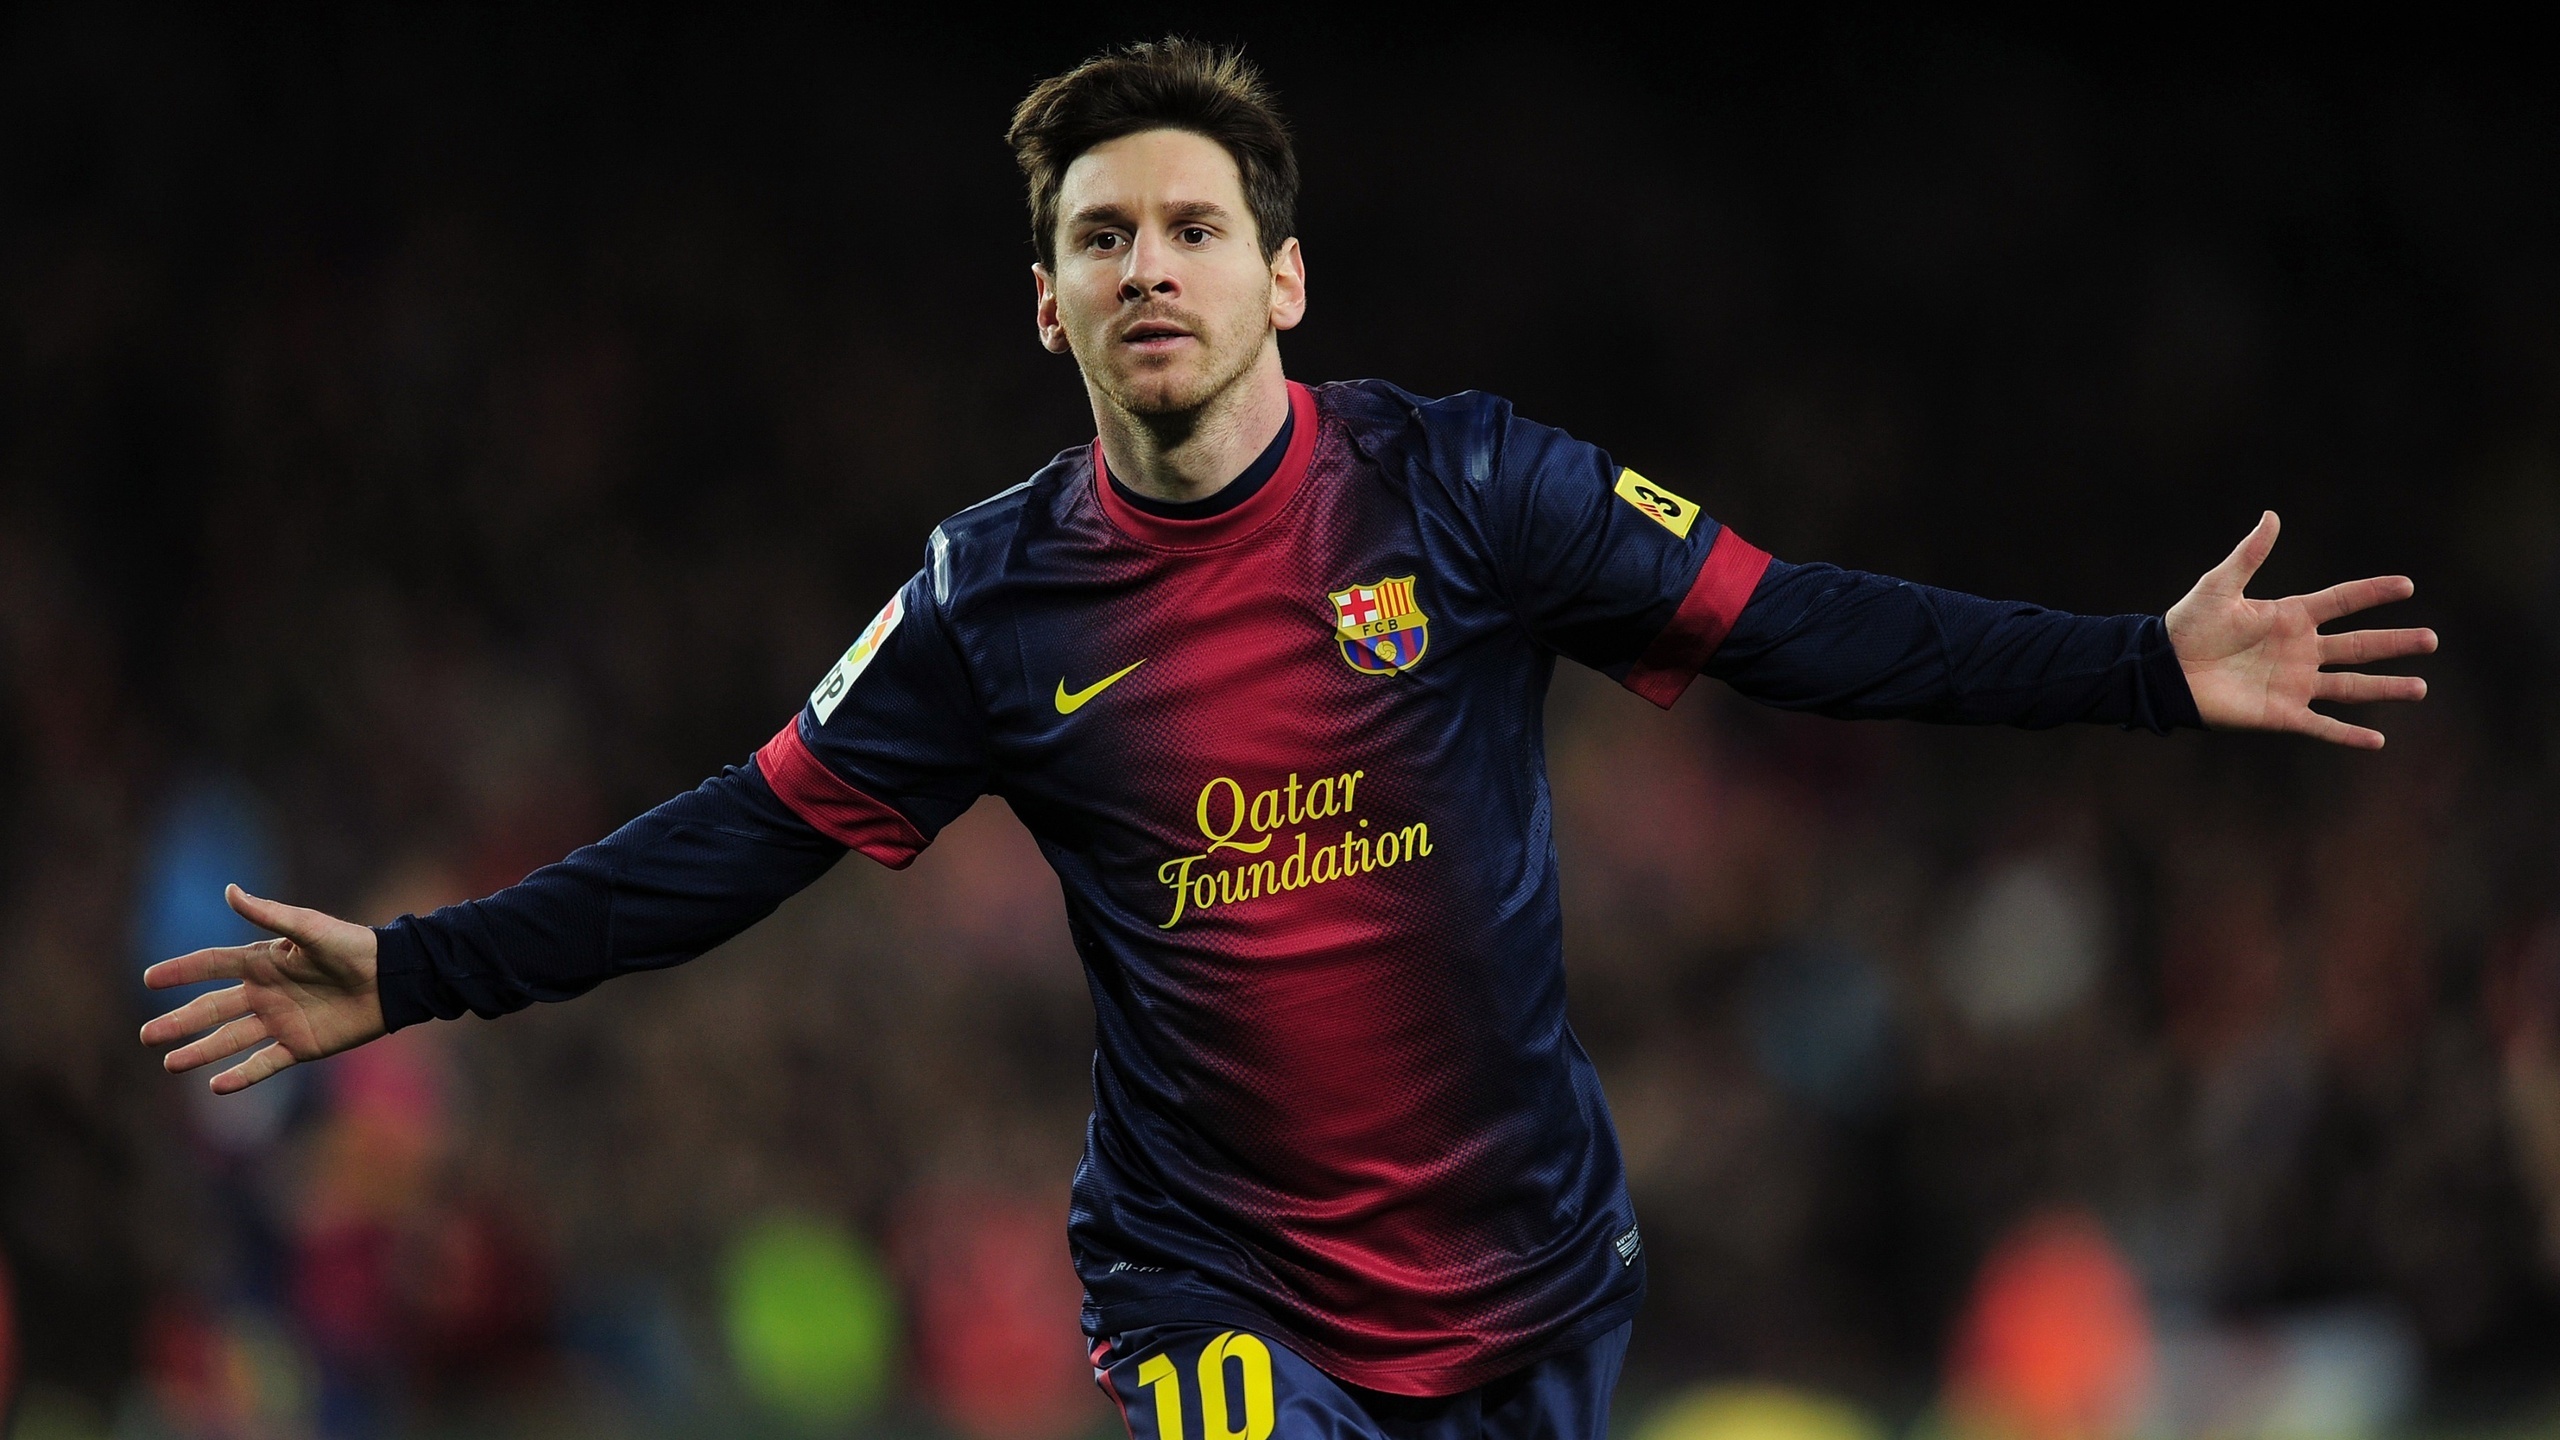 Barcelona's Lionel Messi celebration pictures